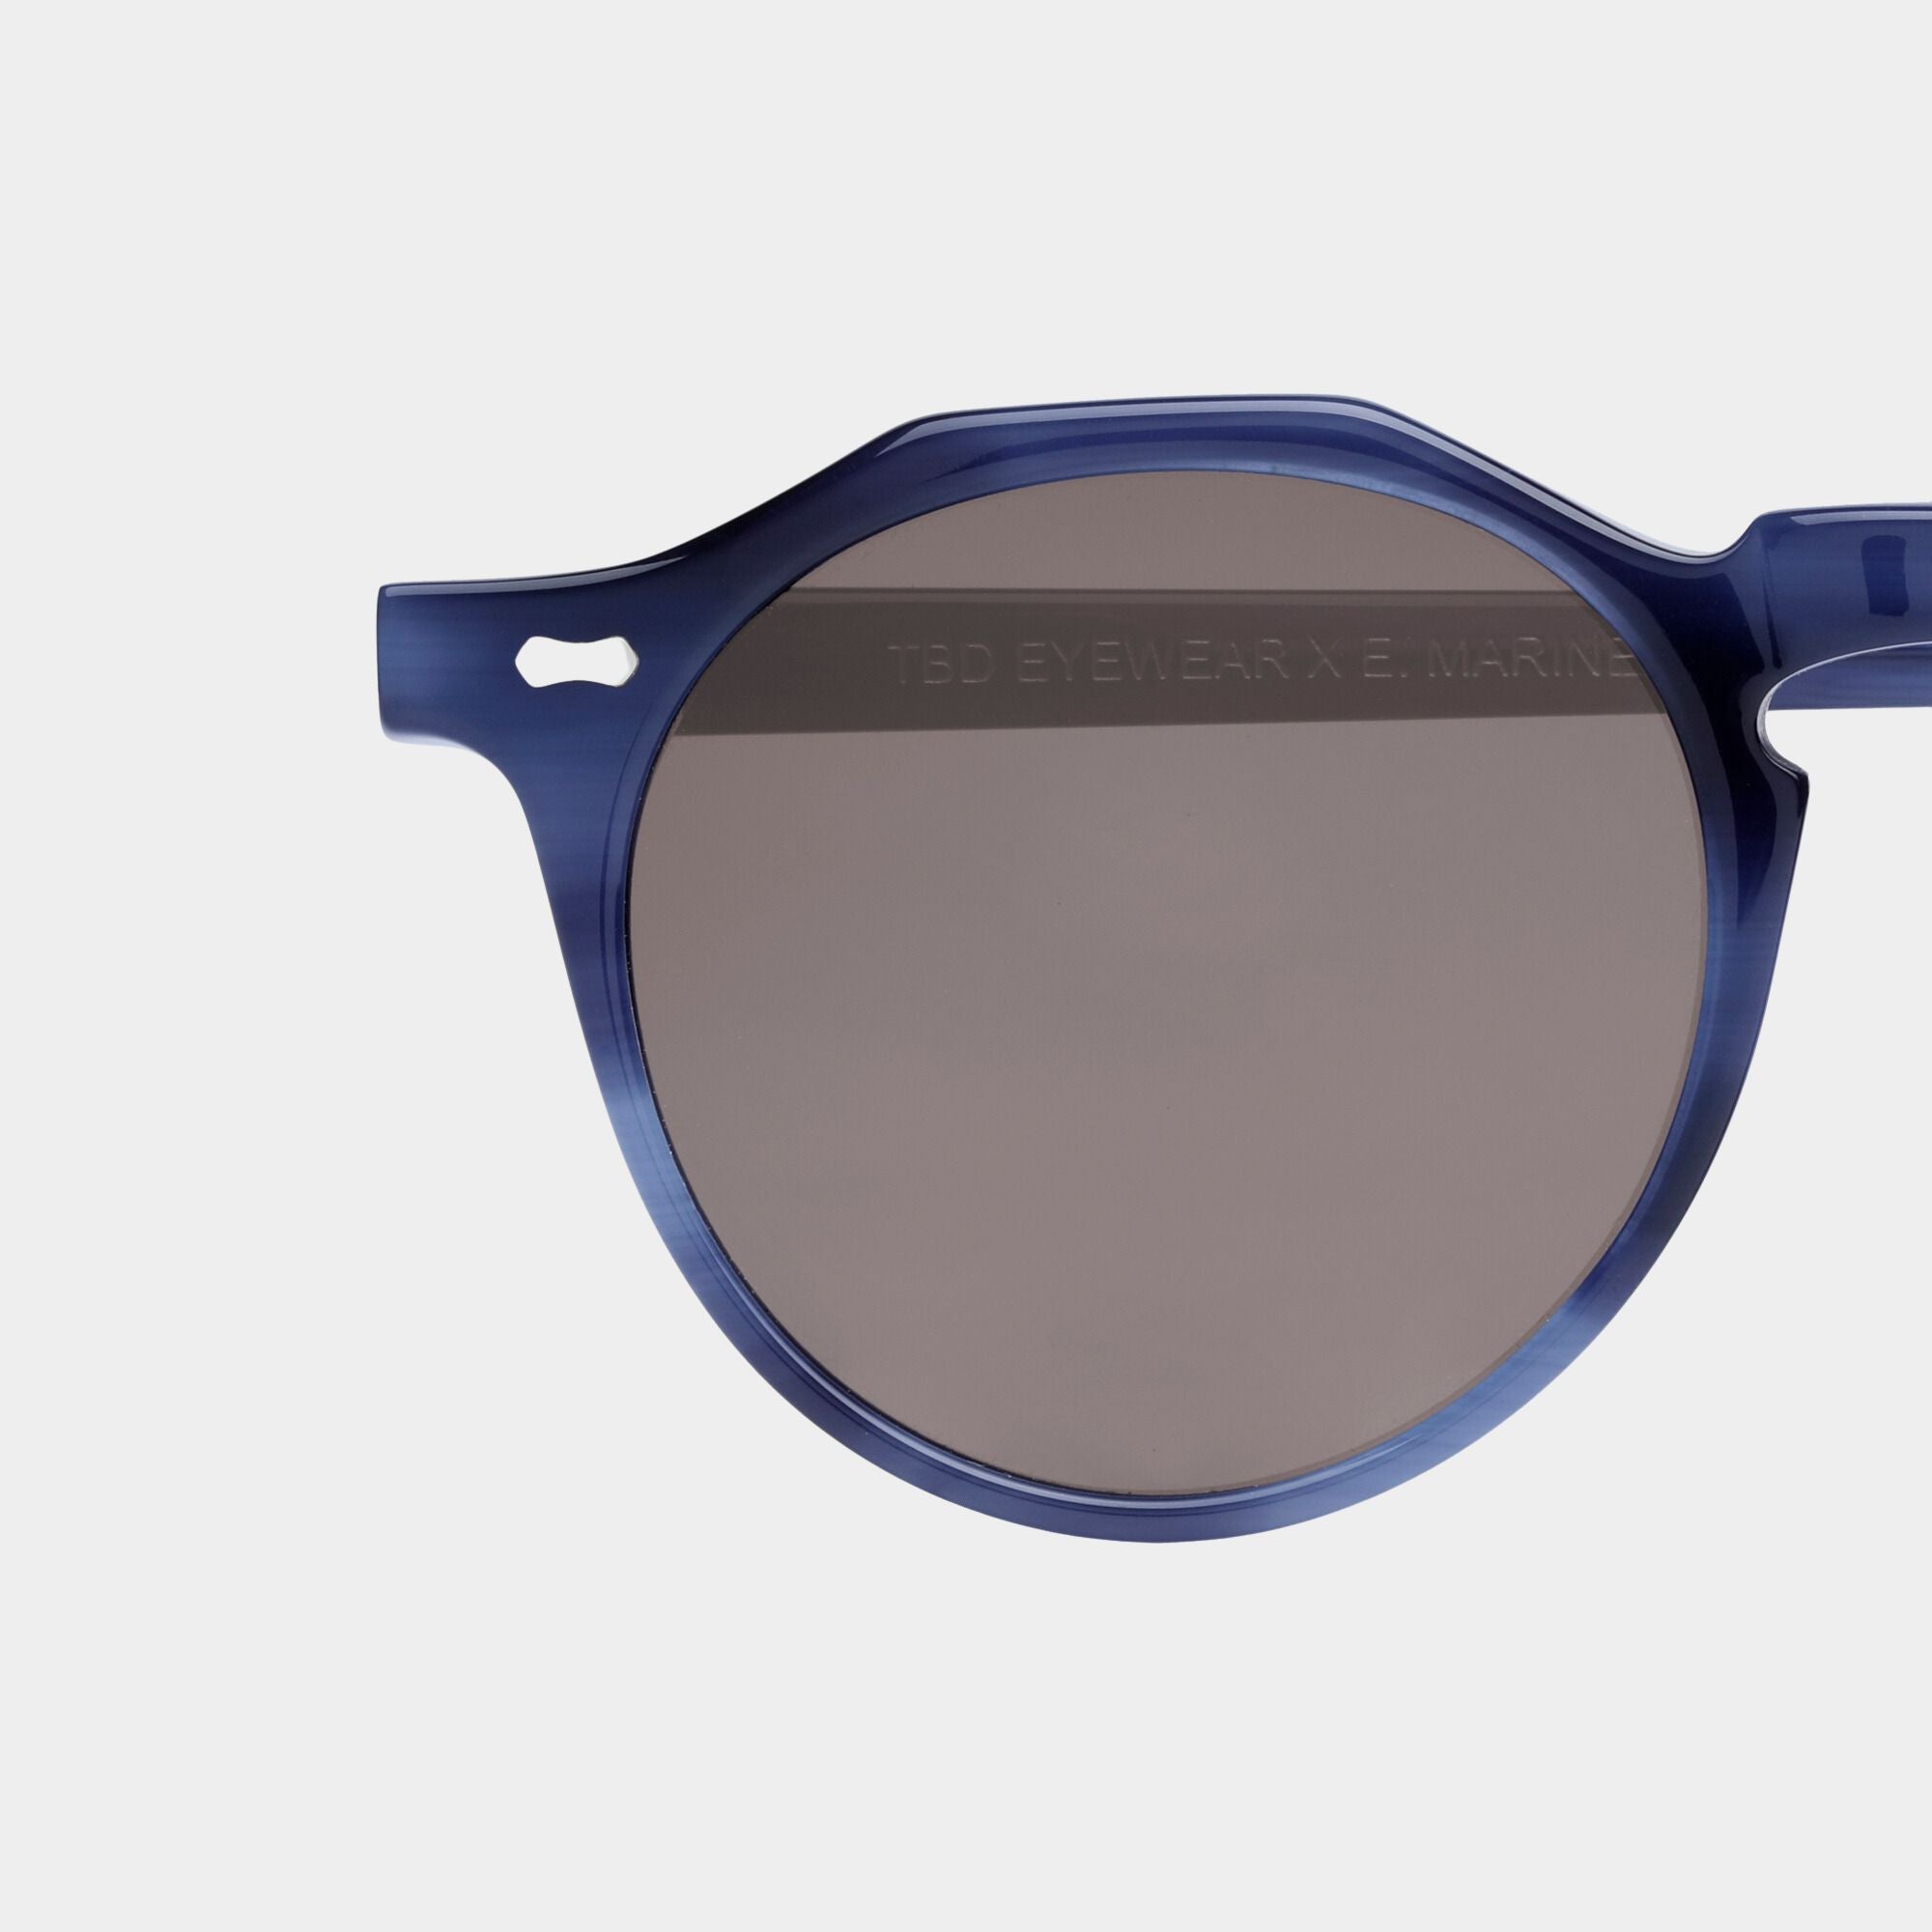 sunglasses-lapel-limited-edition-marinella-tbd-eyewear-lens